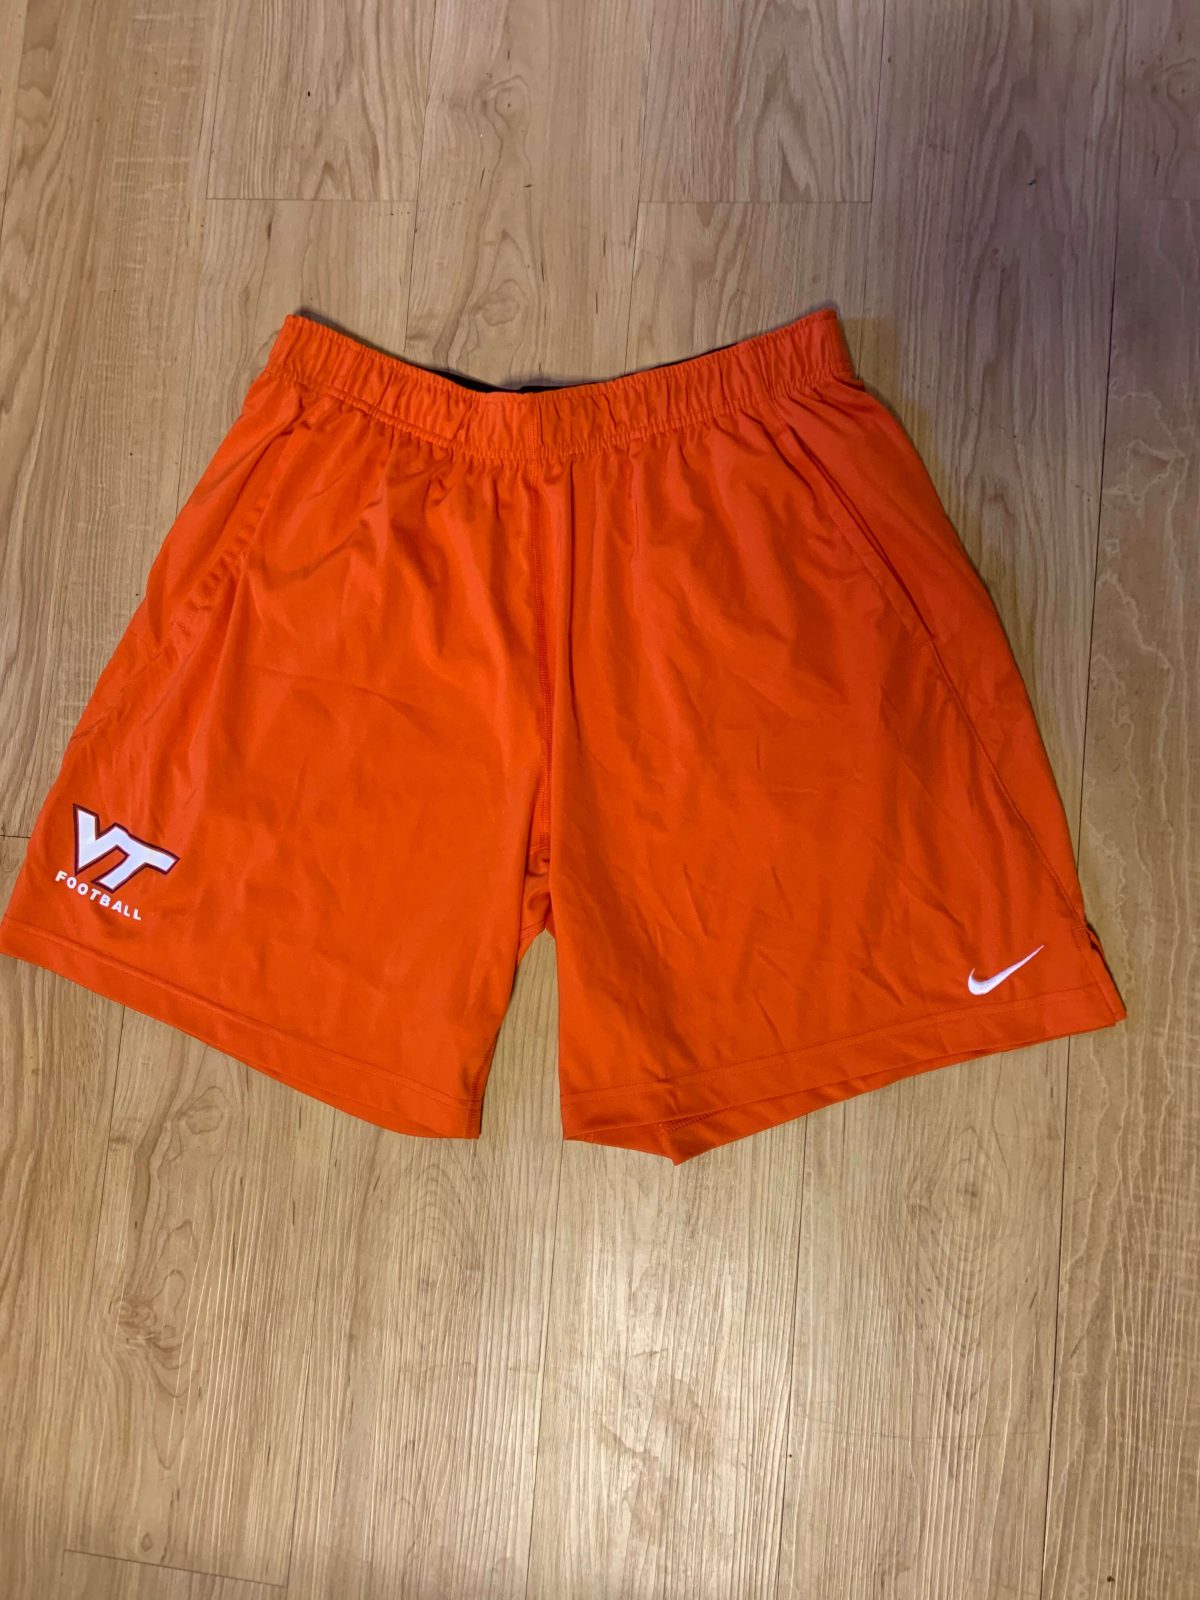 Virginia Tech Football Nike Dri-Fit Shorts : NARP Clothing